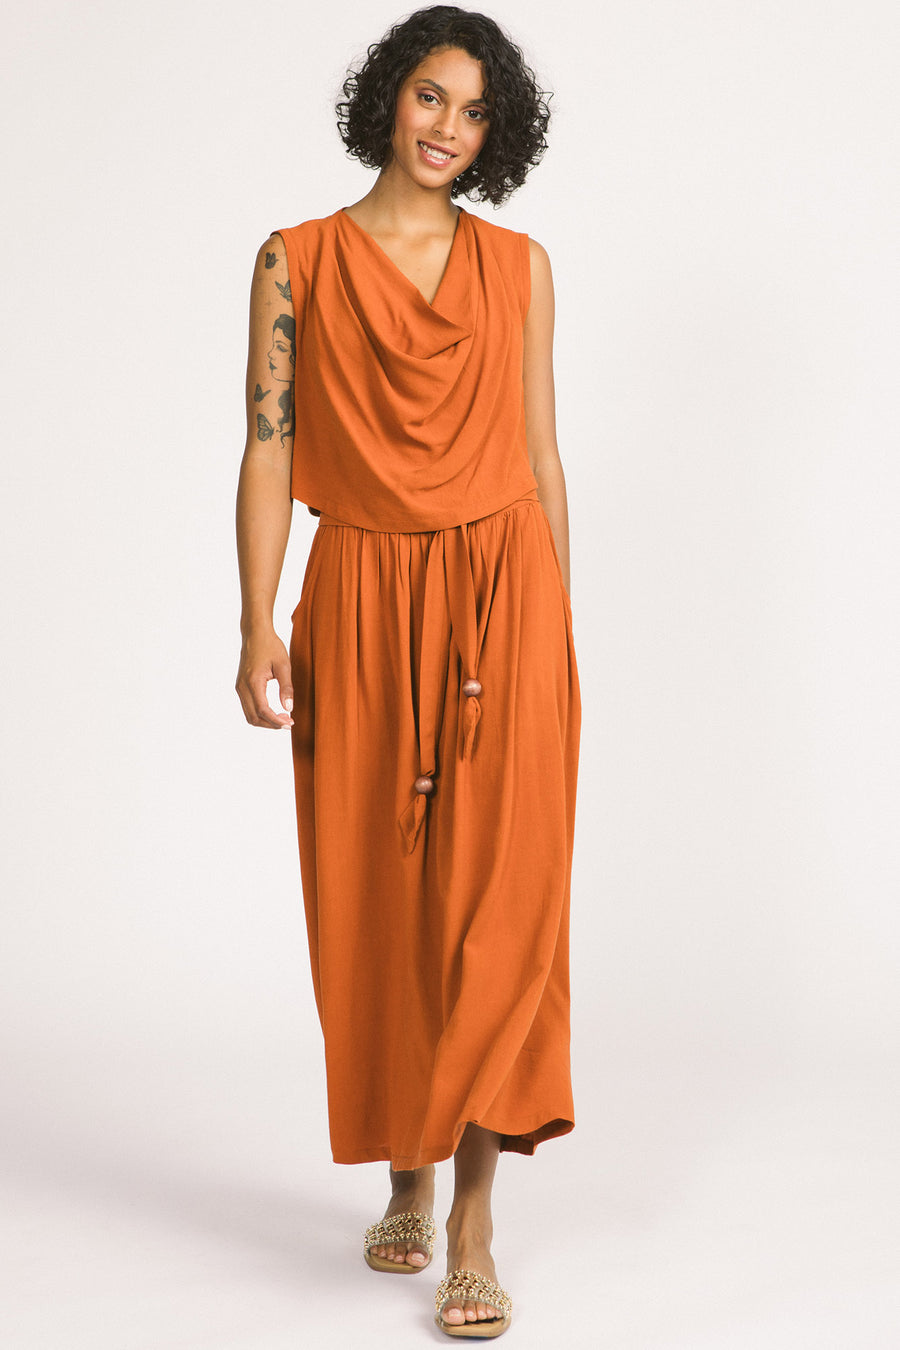 Woman wearing orange cognac Oriana maxi skirt by Allison Wonderland. 